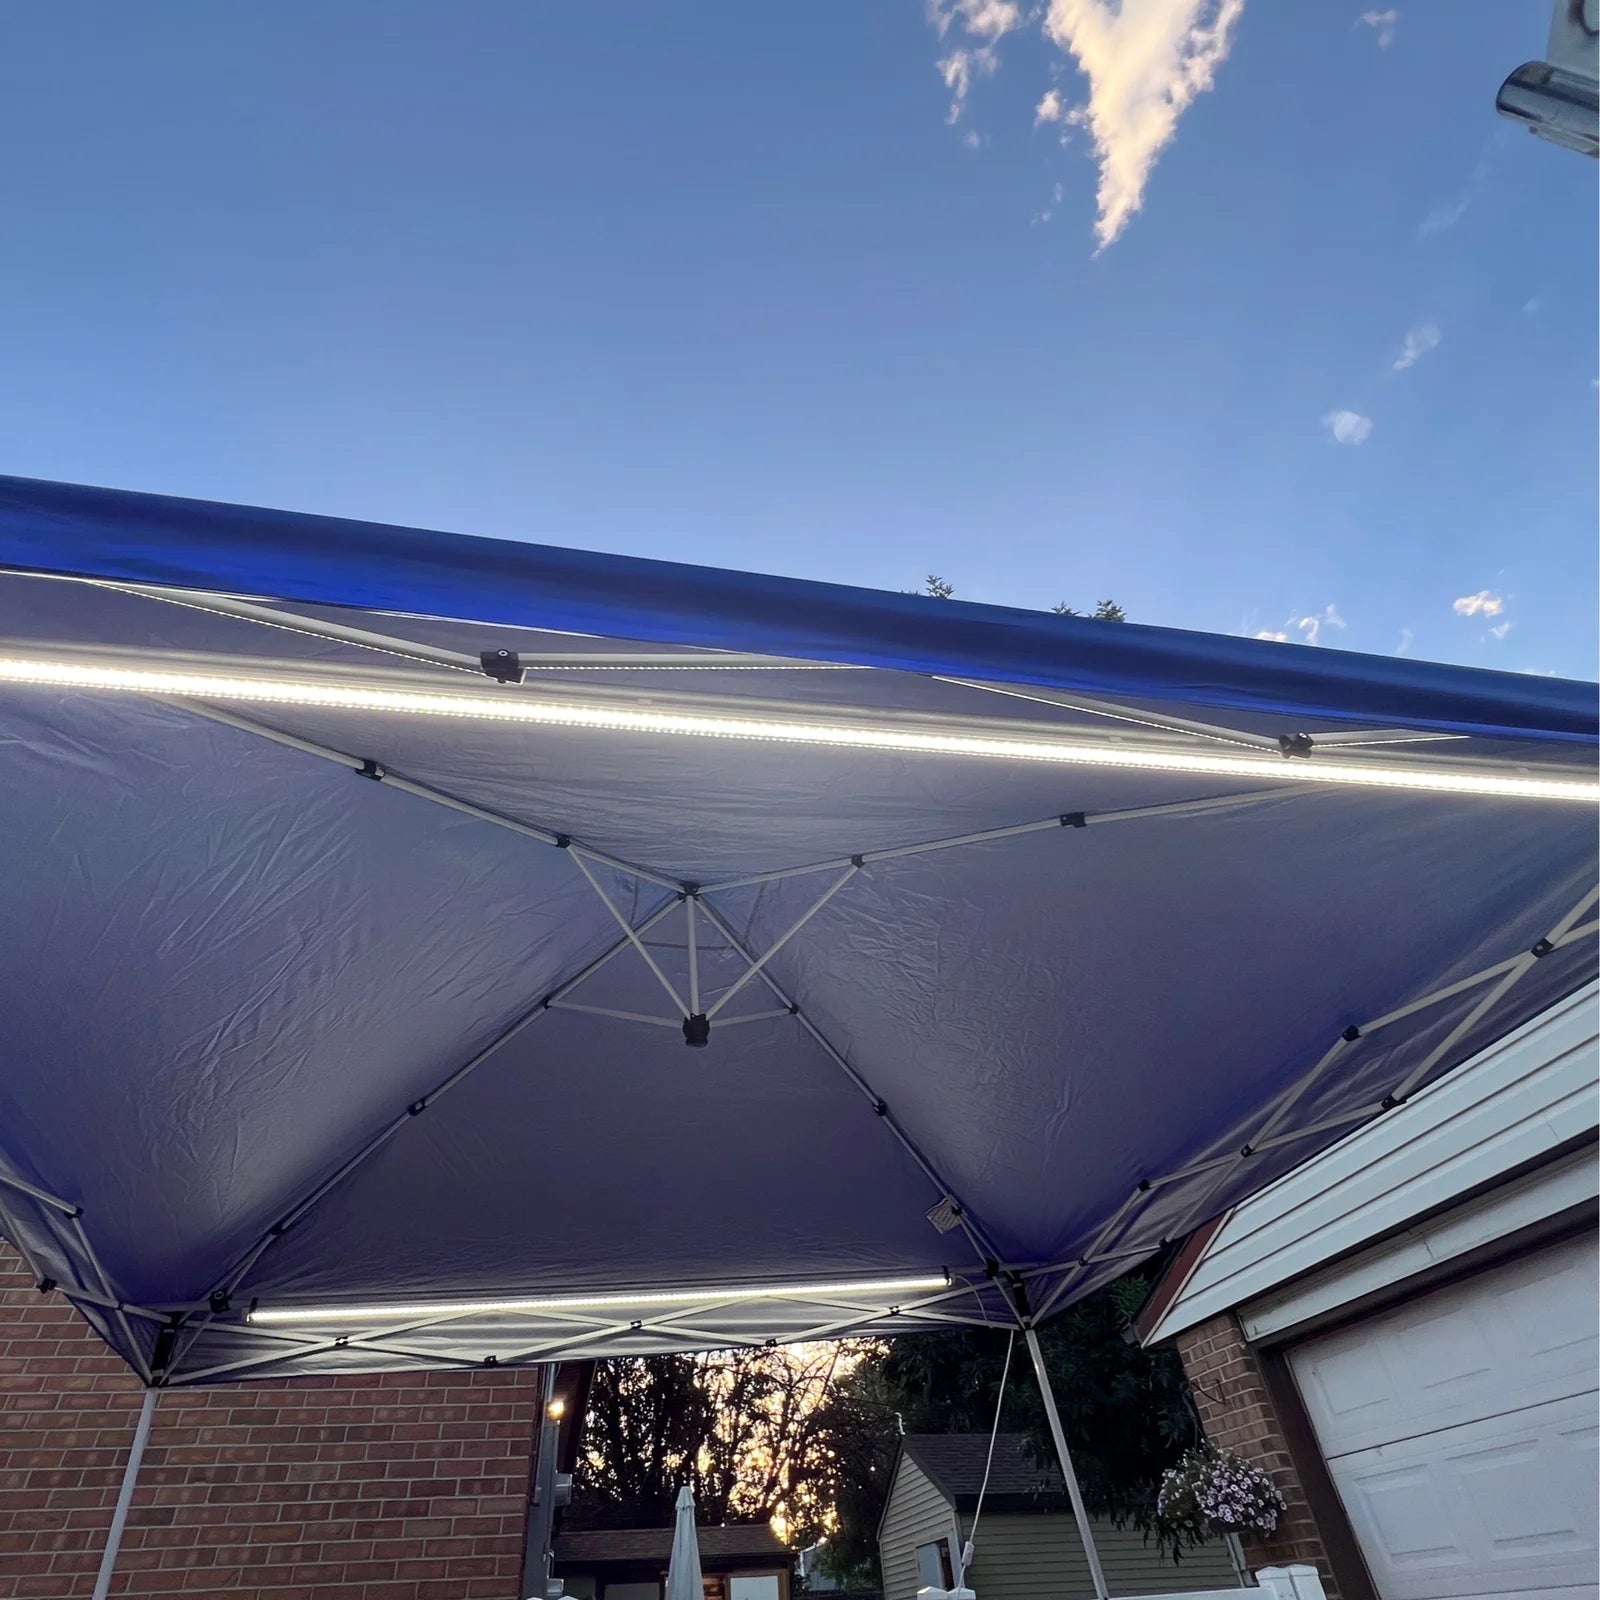 Pop-Up Canopy LED Lighting, Tent Lights